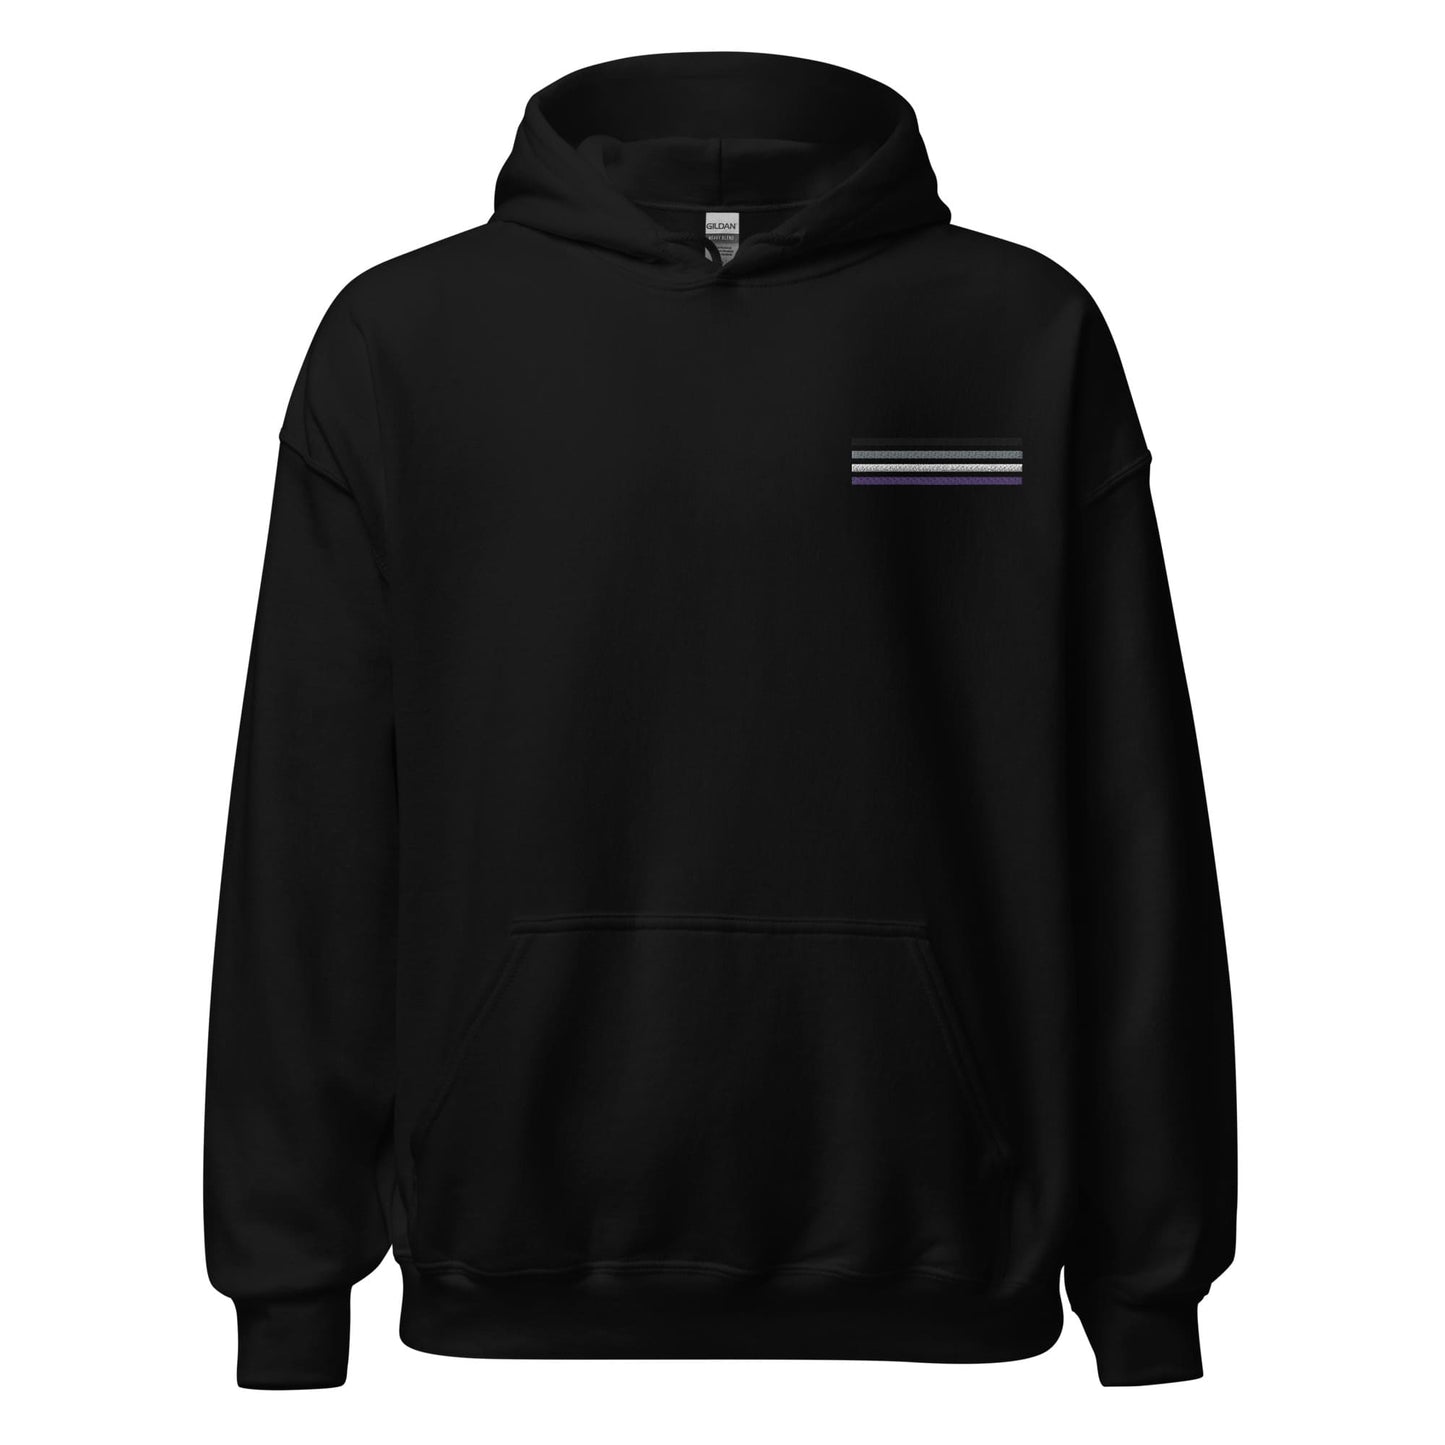 asexual hoodie, subtle ace pride flag embroidered pocket design hooded sweatshirt, hang